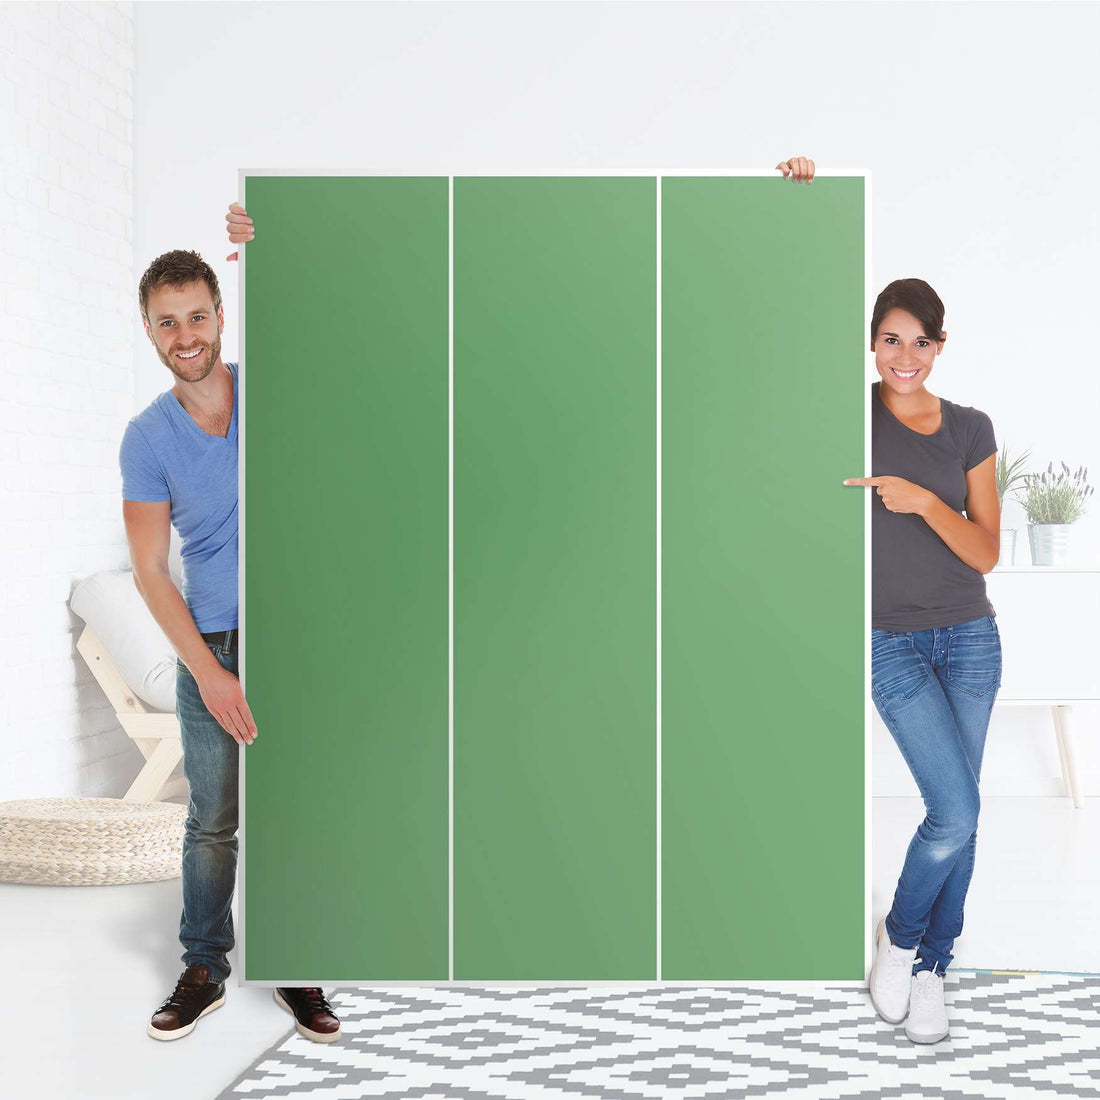 Folie für Möbel Grün Light - IKEA Pax Schrank 201 cm Höhe - 3 Türen - Folie